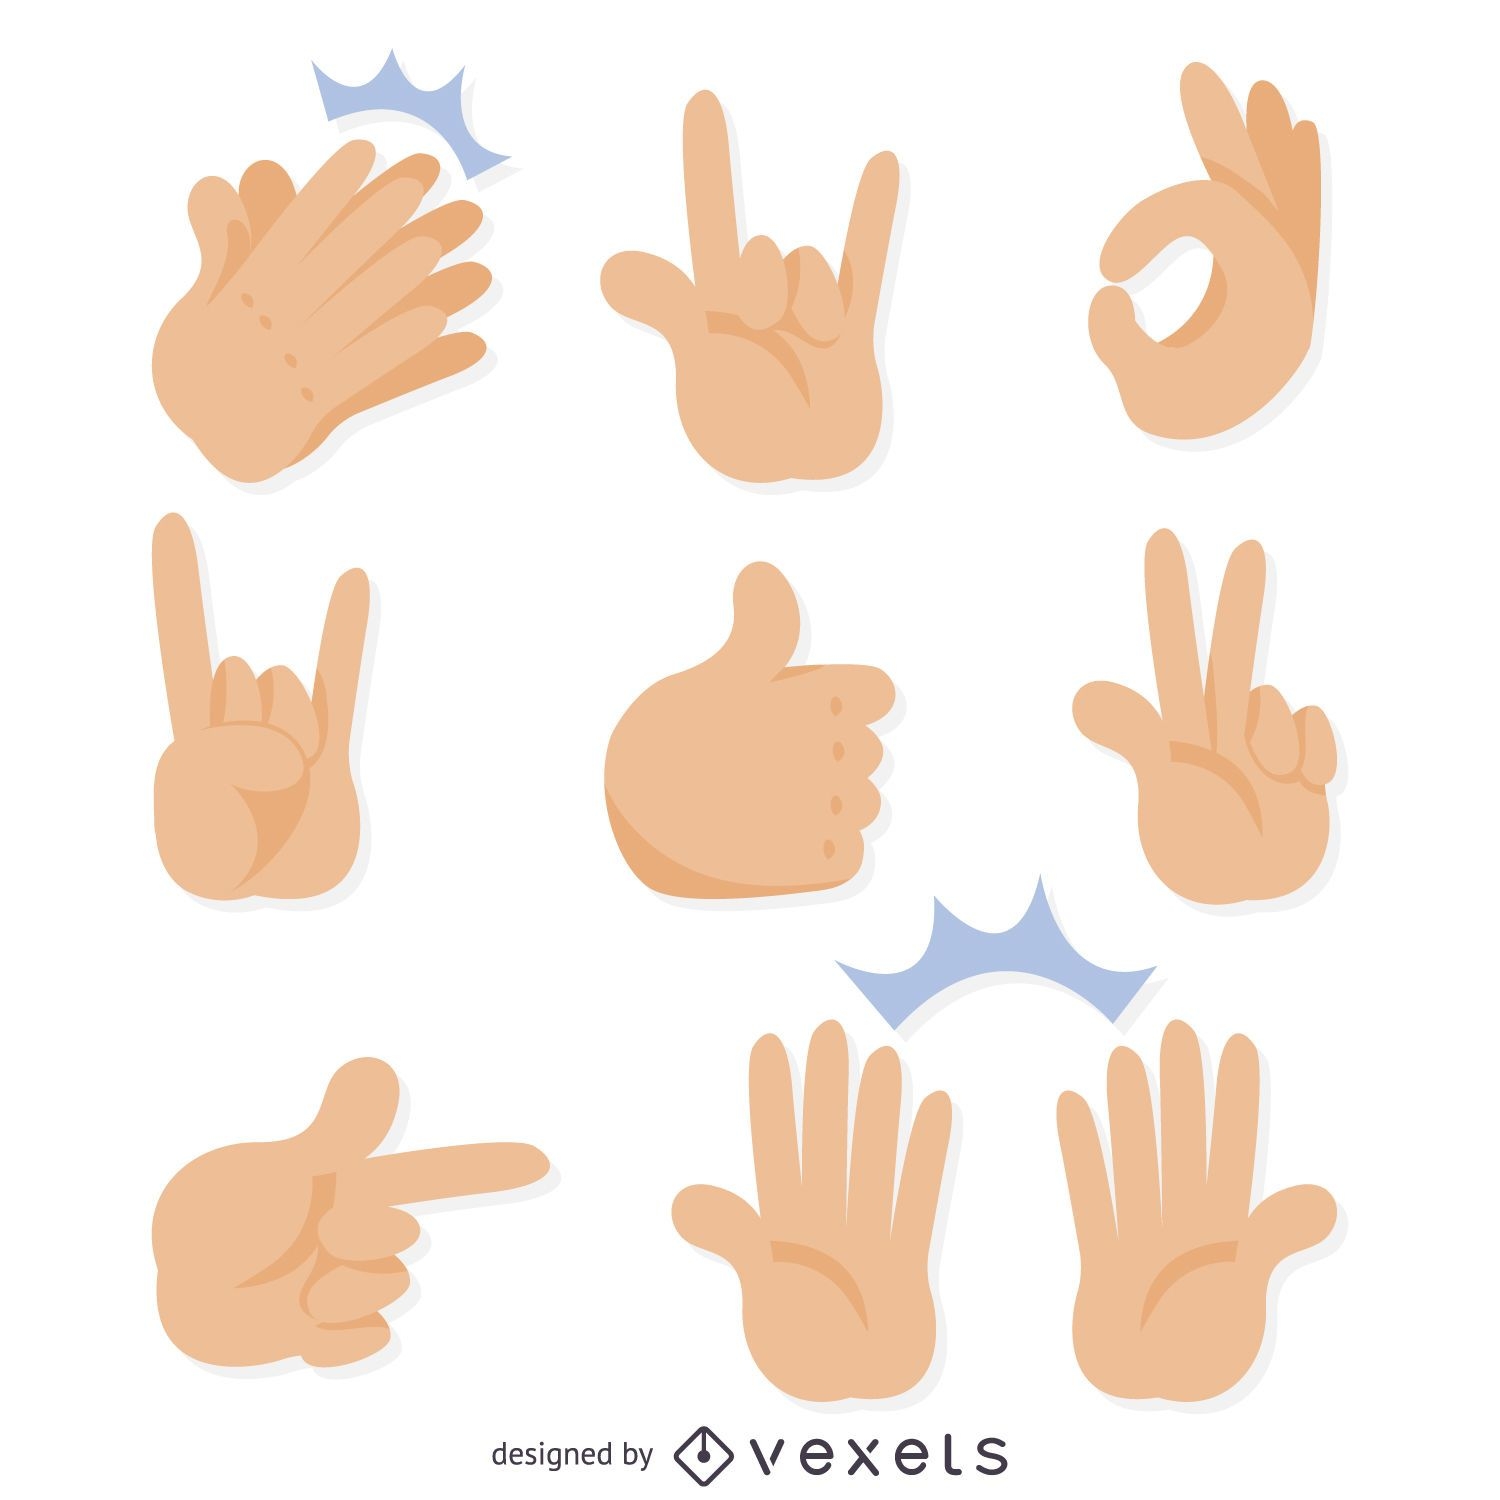 Flat hand gestures illustrations